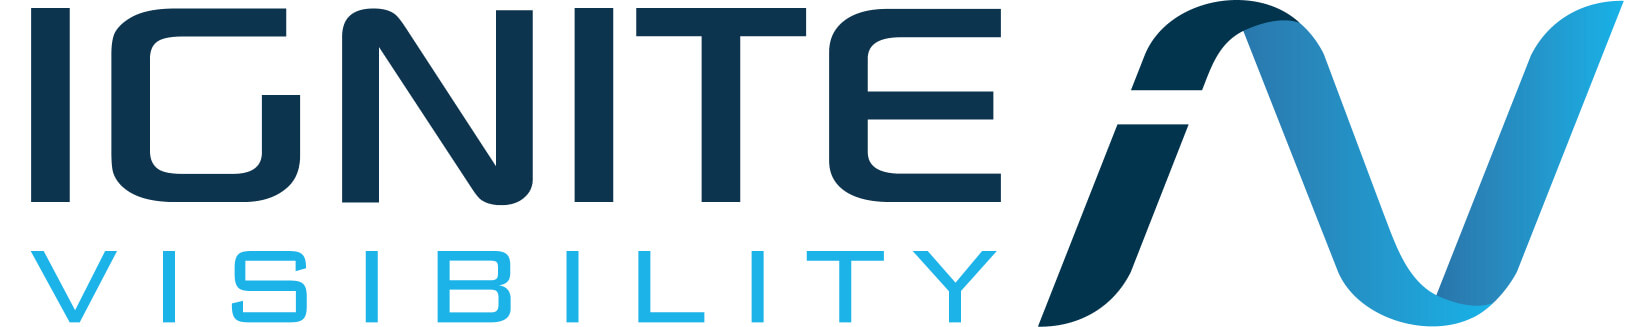  Top Enterprise Online Marketing Company Logo: Ignite Visibility